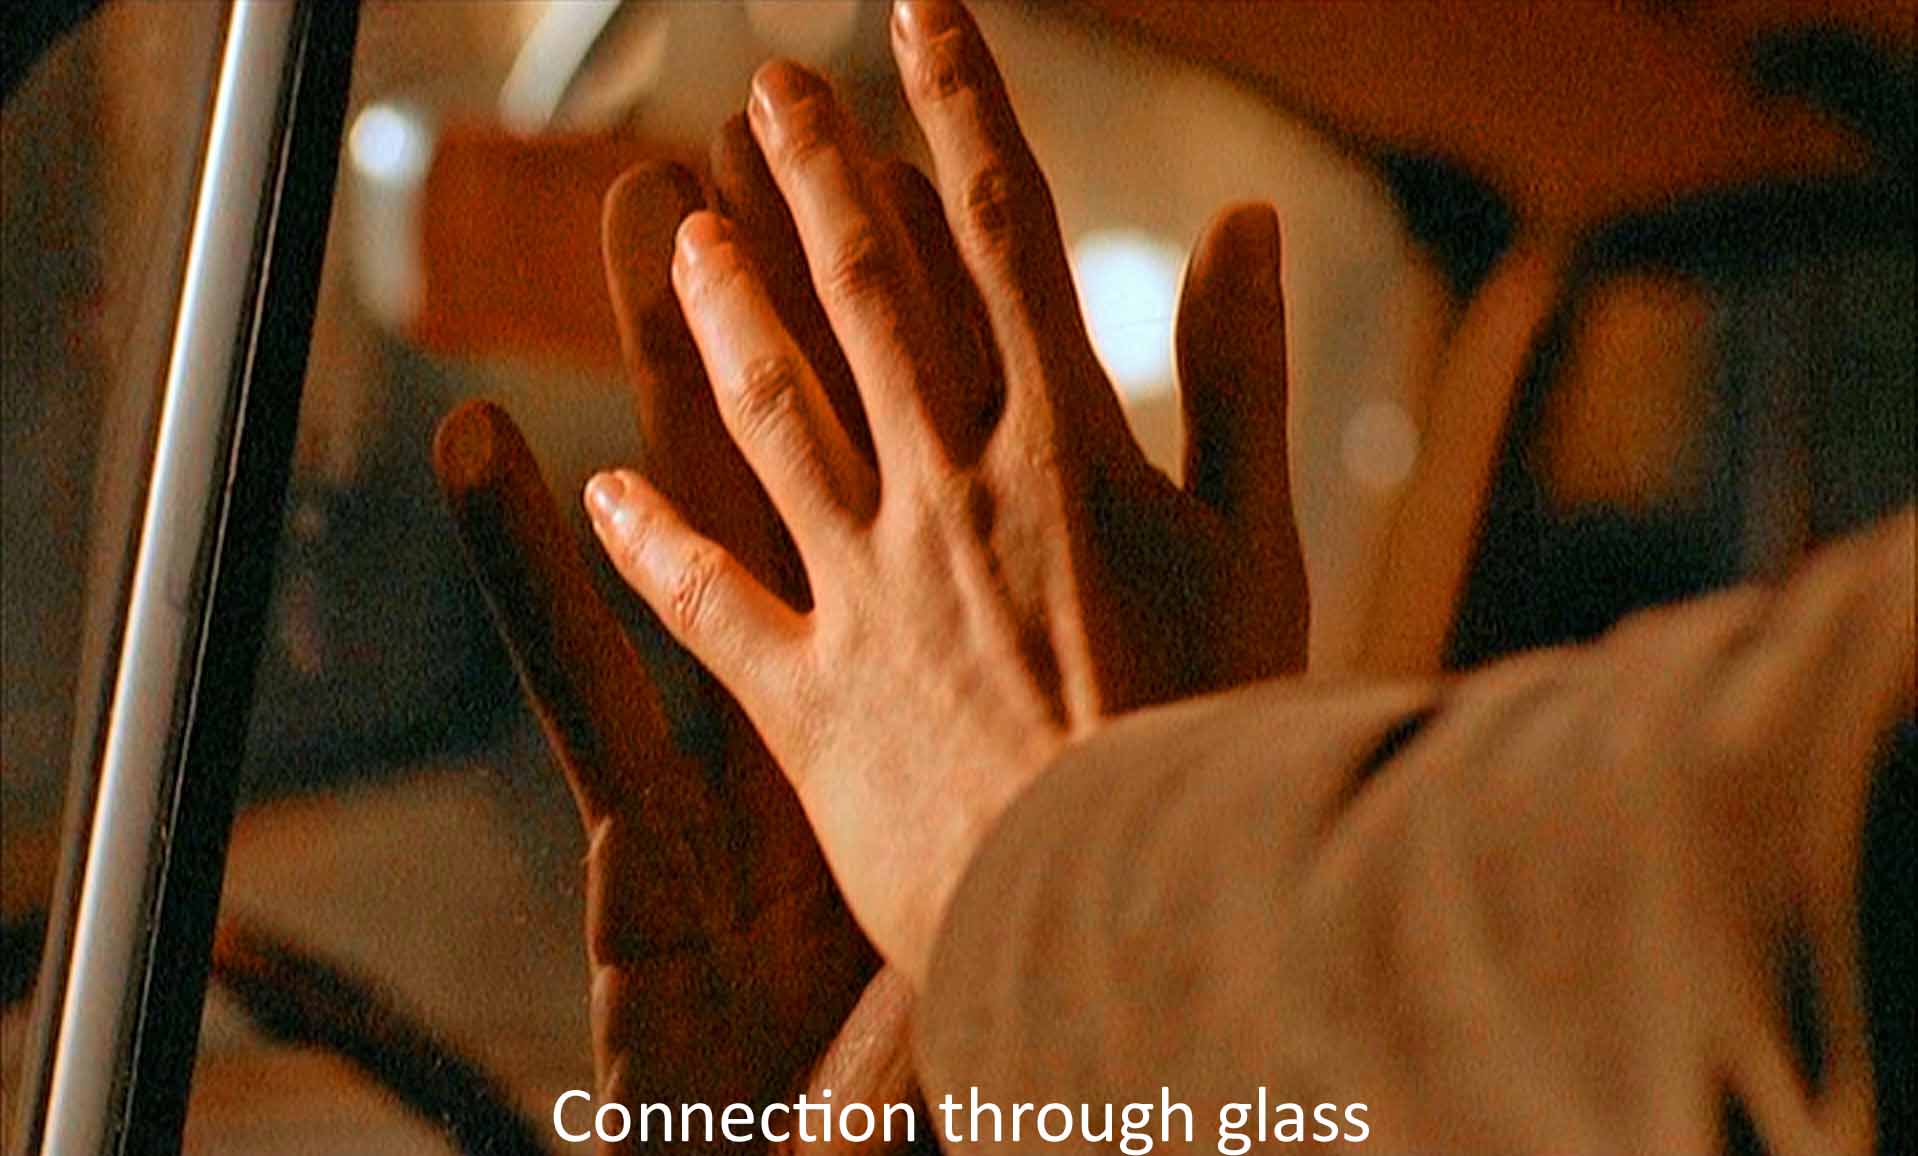 Communion through glass